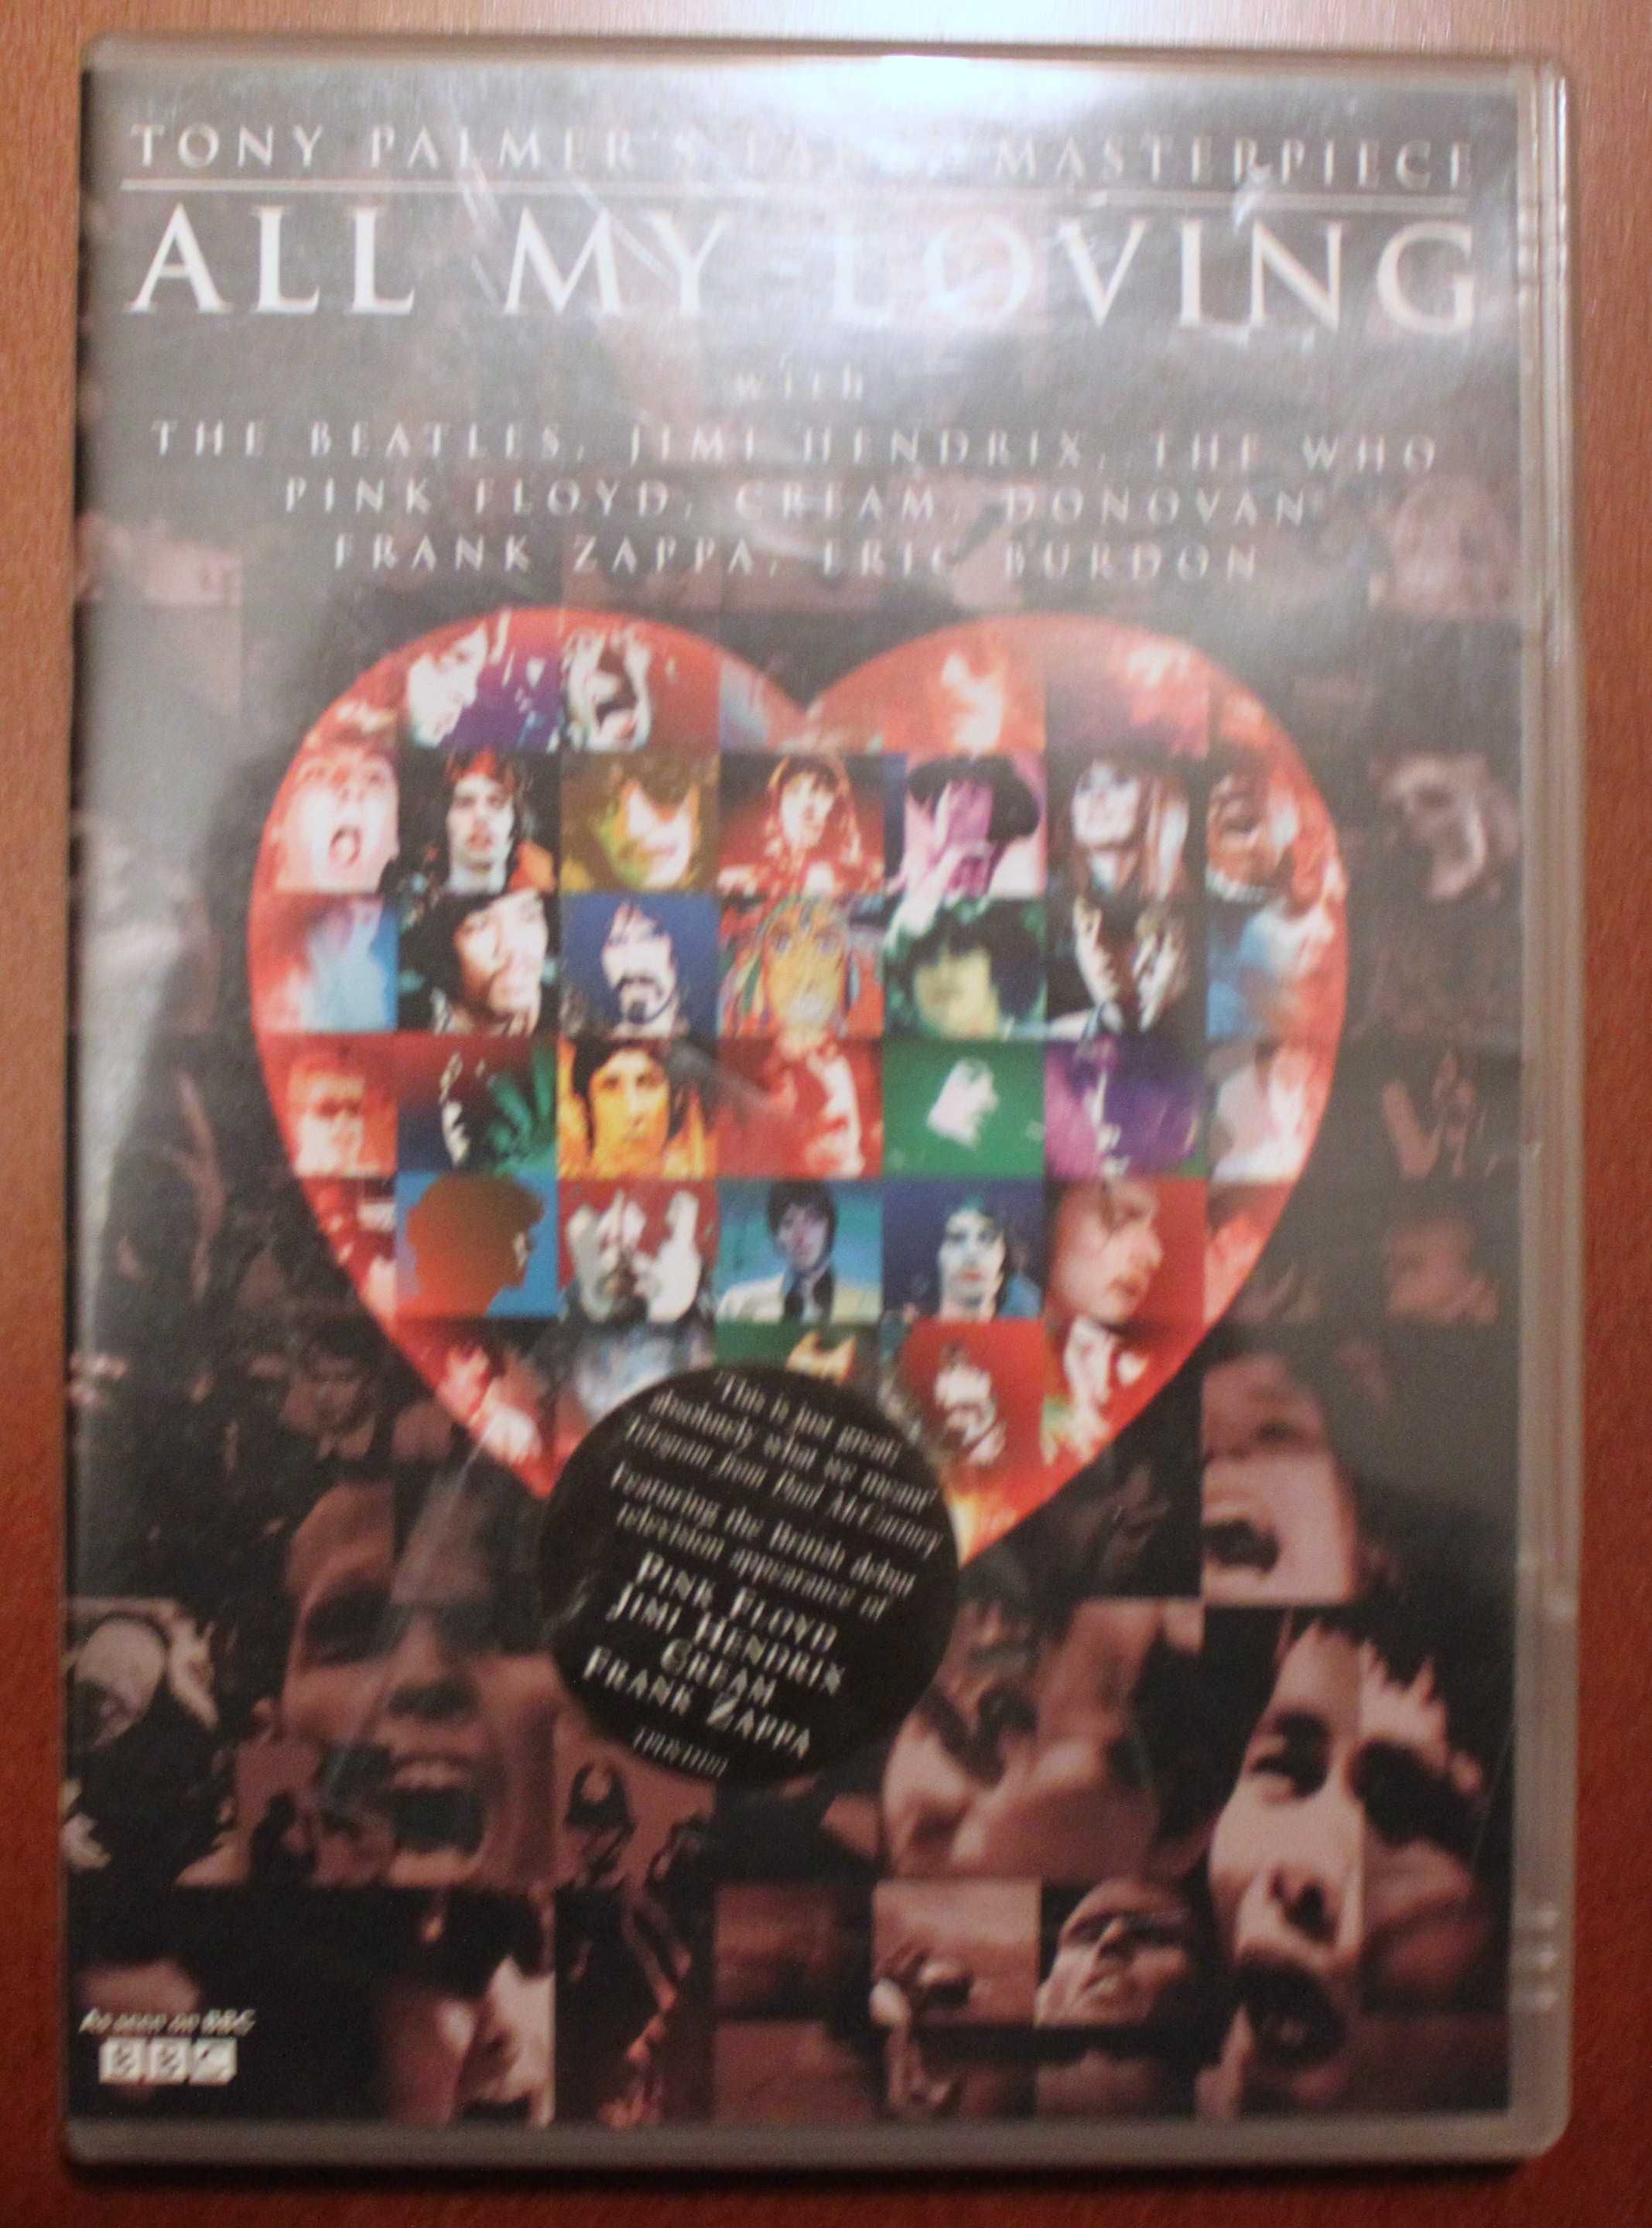 All My Loving DVD Tony Palmer Beatles Zappa Pink Floyd Hendrix